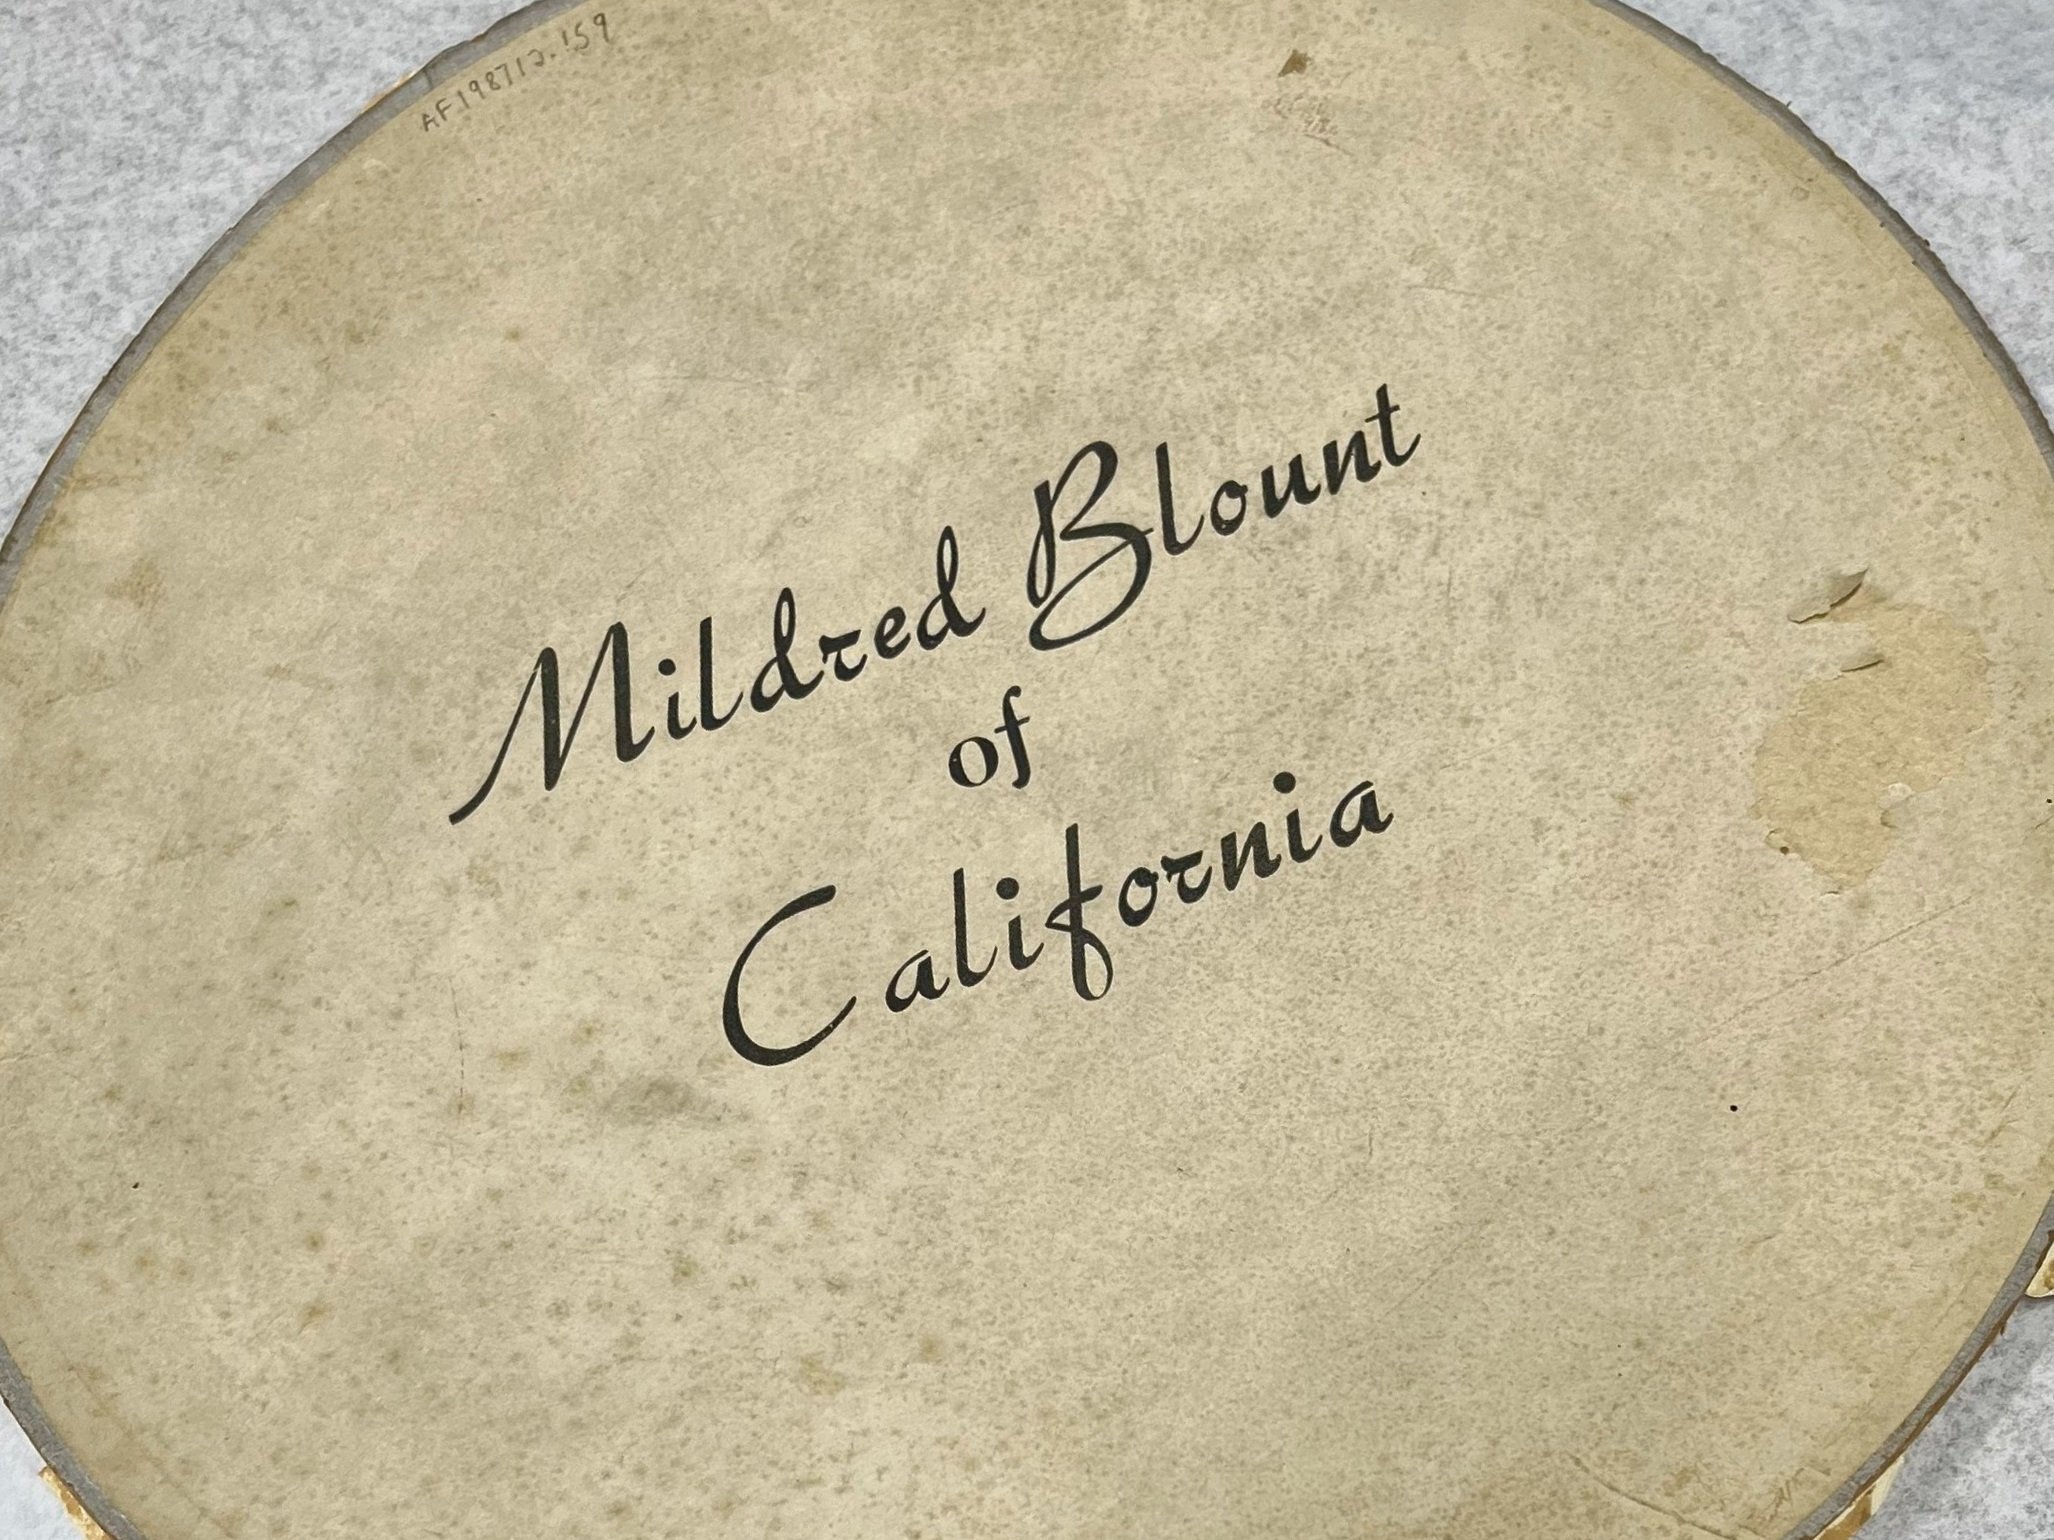 Mildred Blount, hat box lid